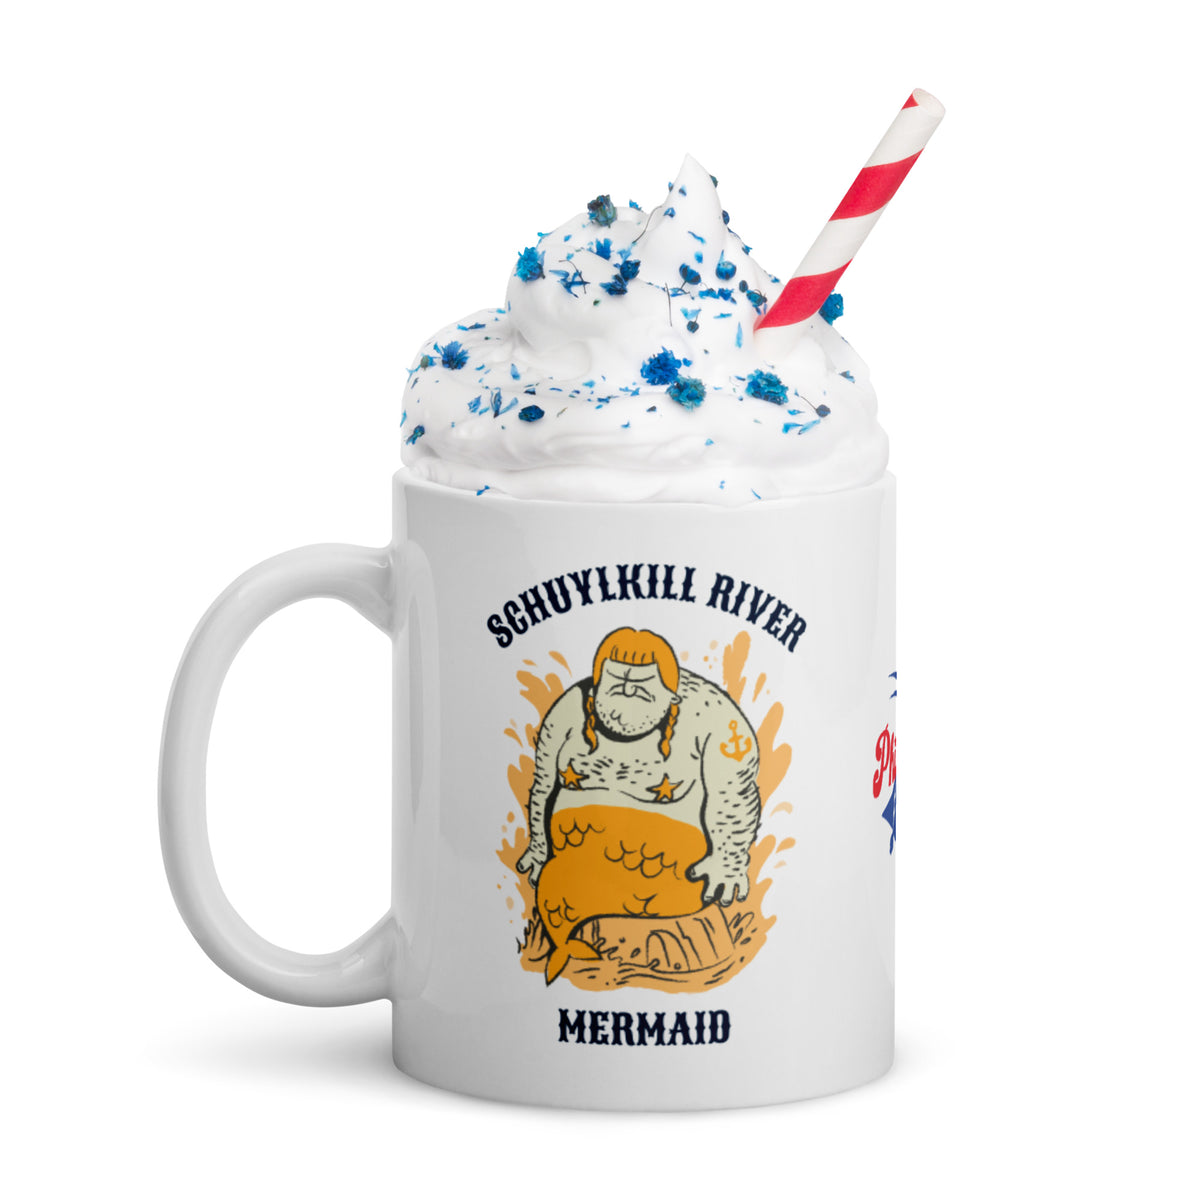 &quot;Schuylkill River Mermaid&quot; Mug